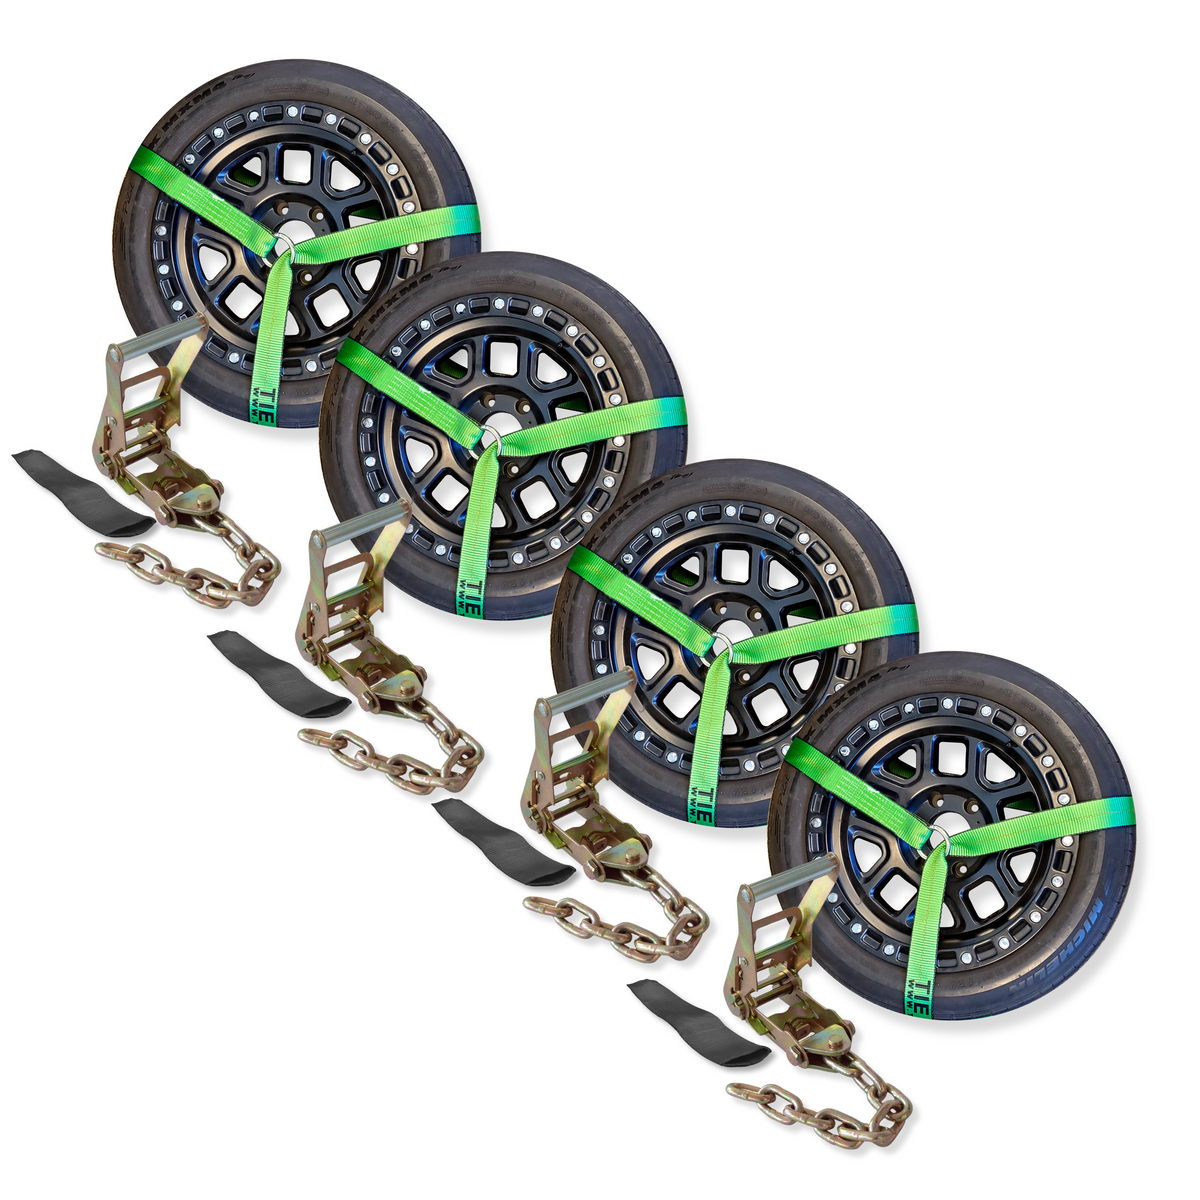 4 Pack 2" Chain Ratchet & Lasso Straps Tow Truck Wrecker Car Hauler Wheel Lift